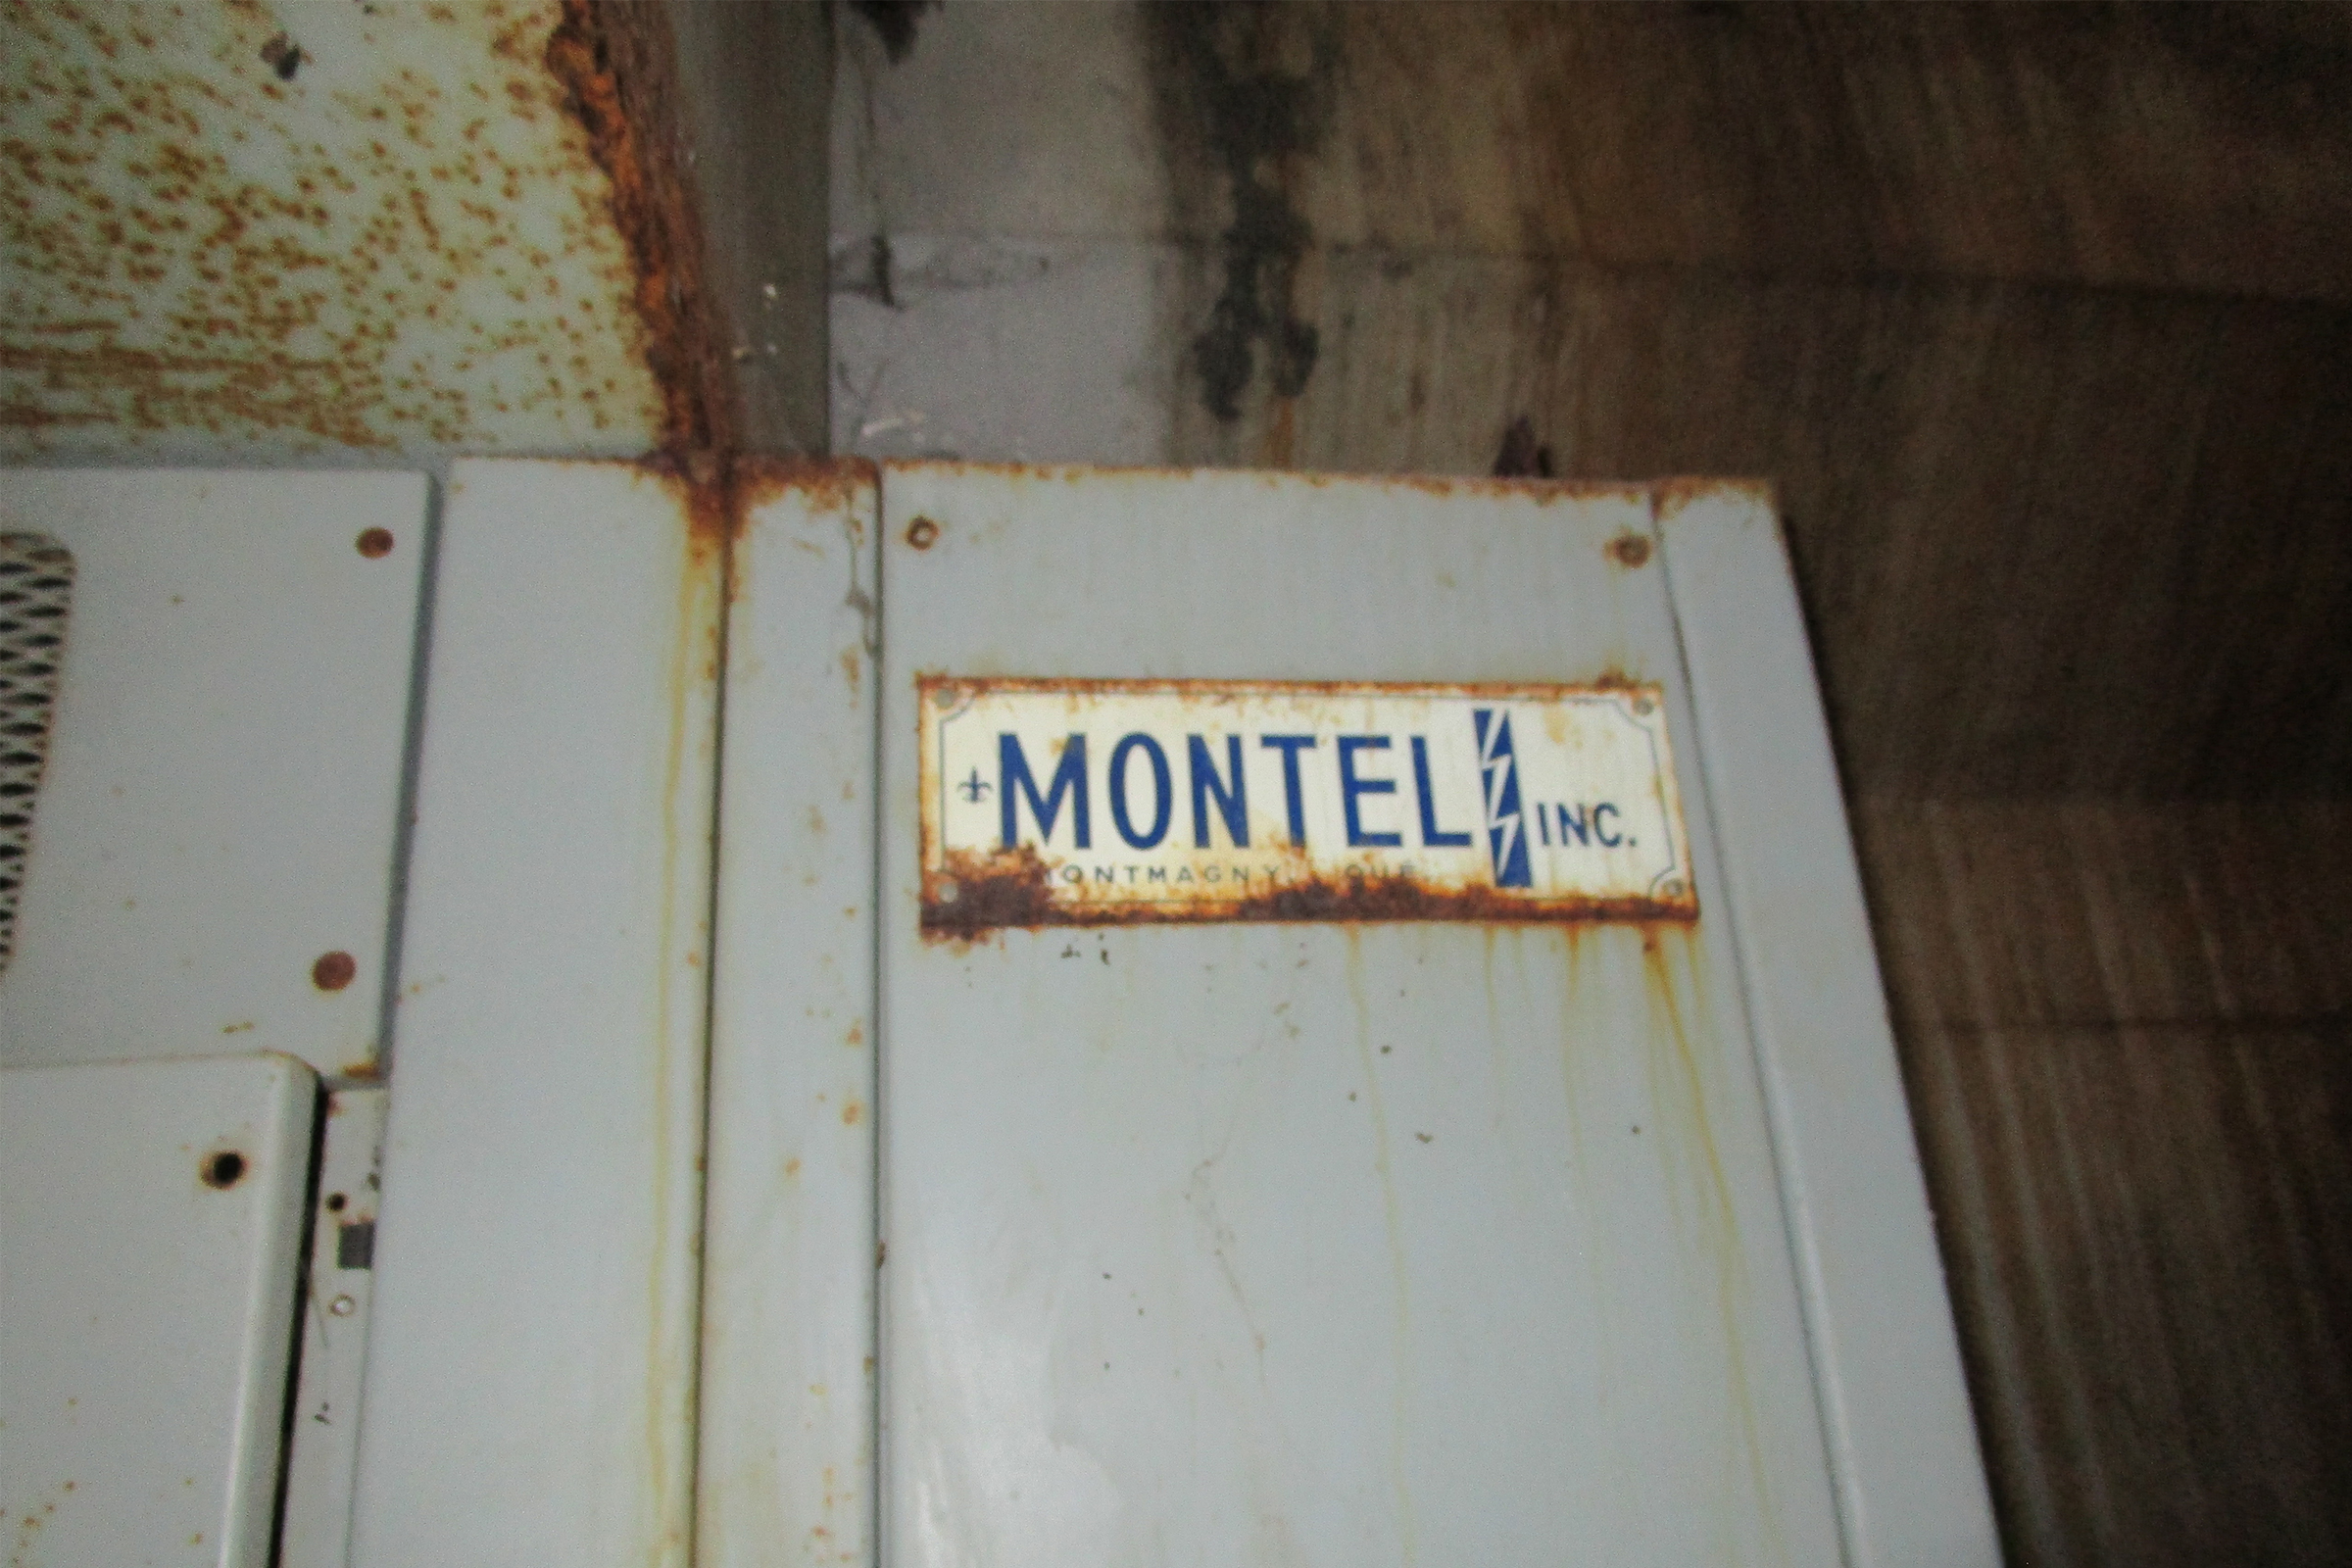 The Evolution of Montel through time